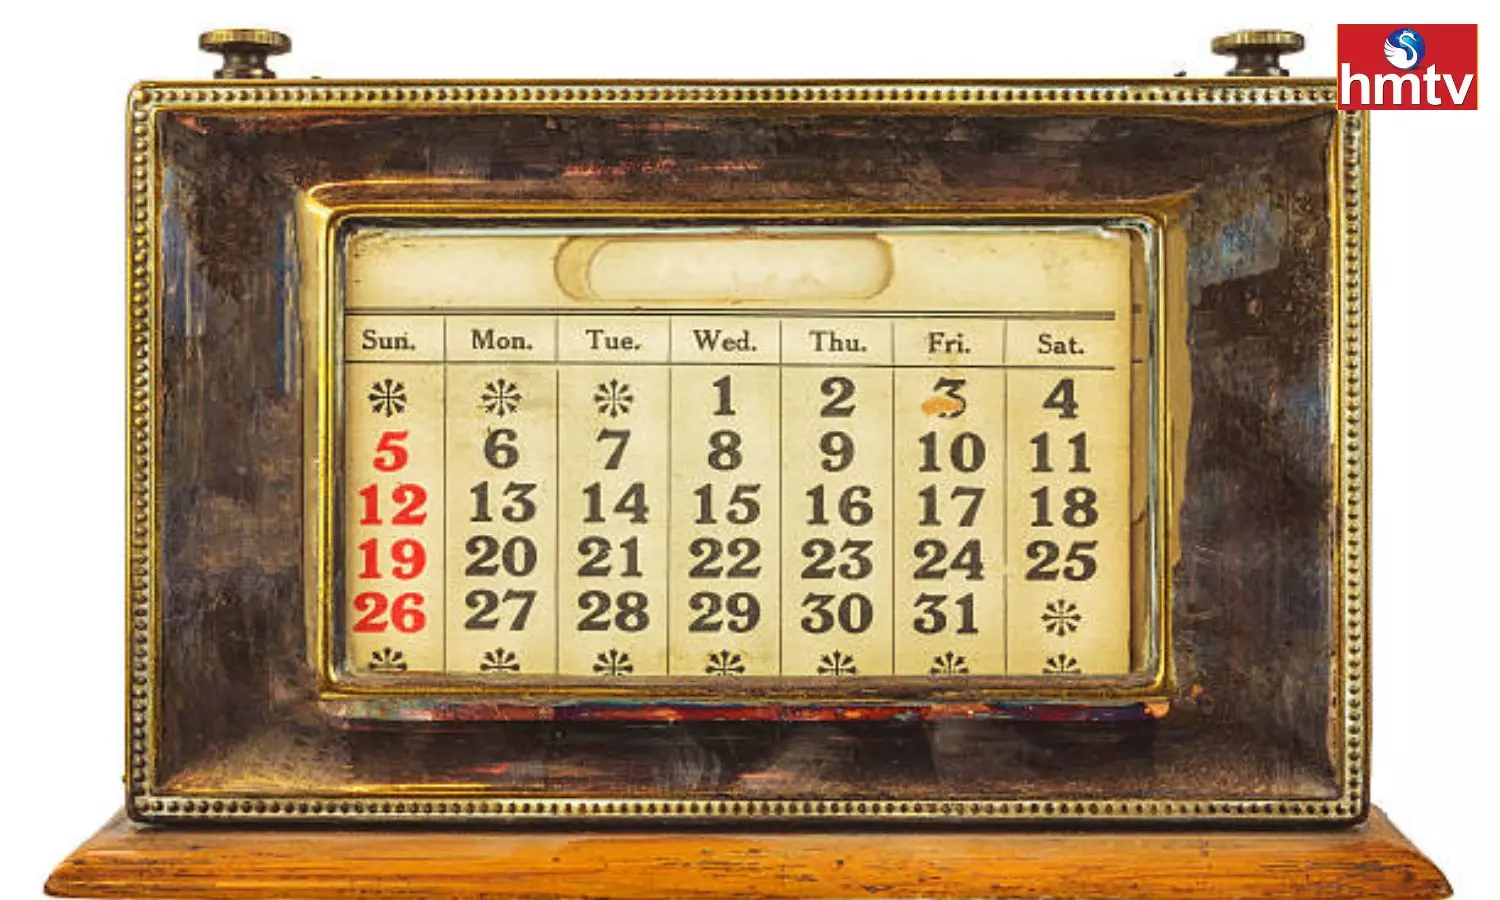 History Behind the Calendar